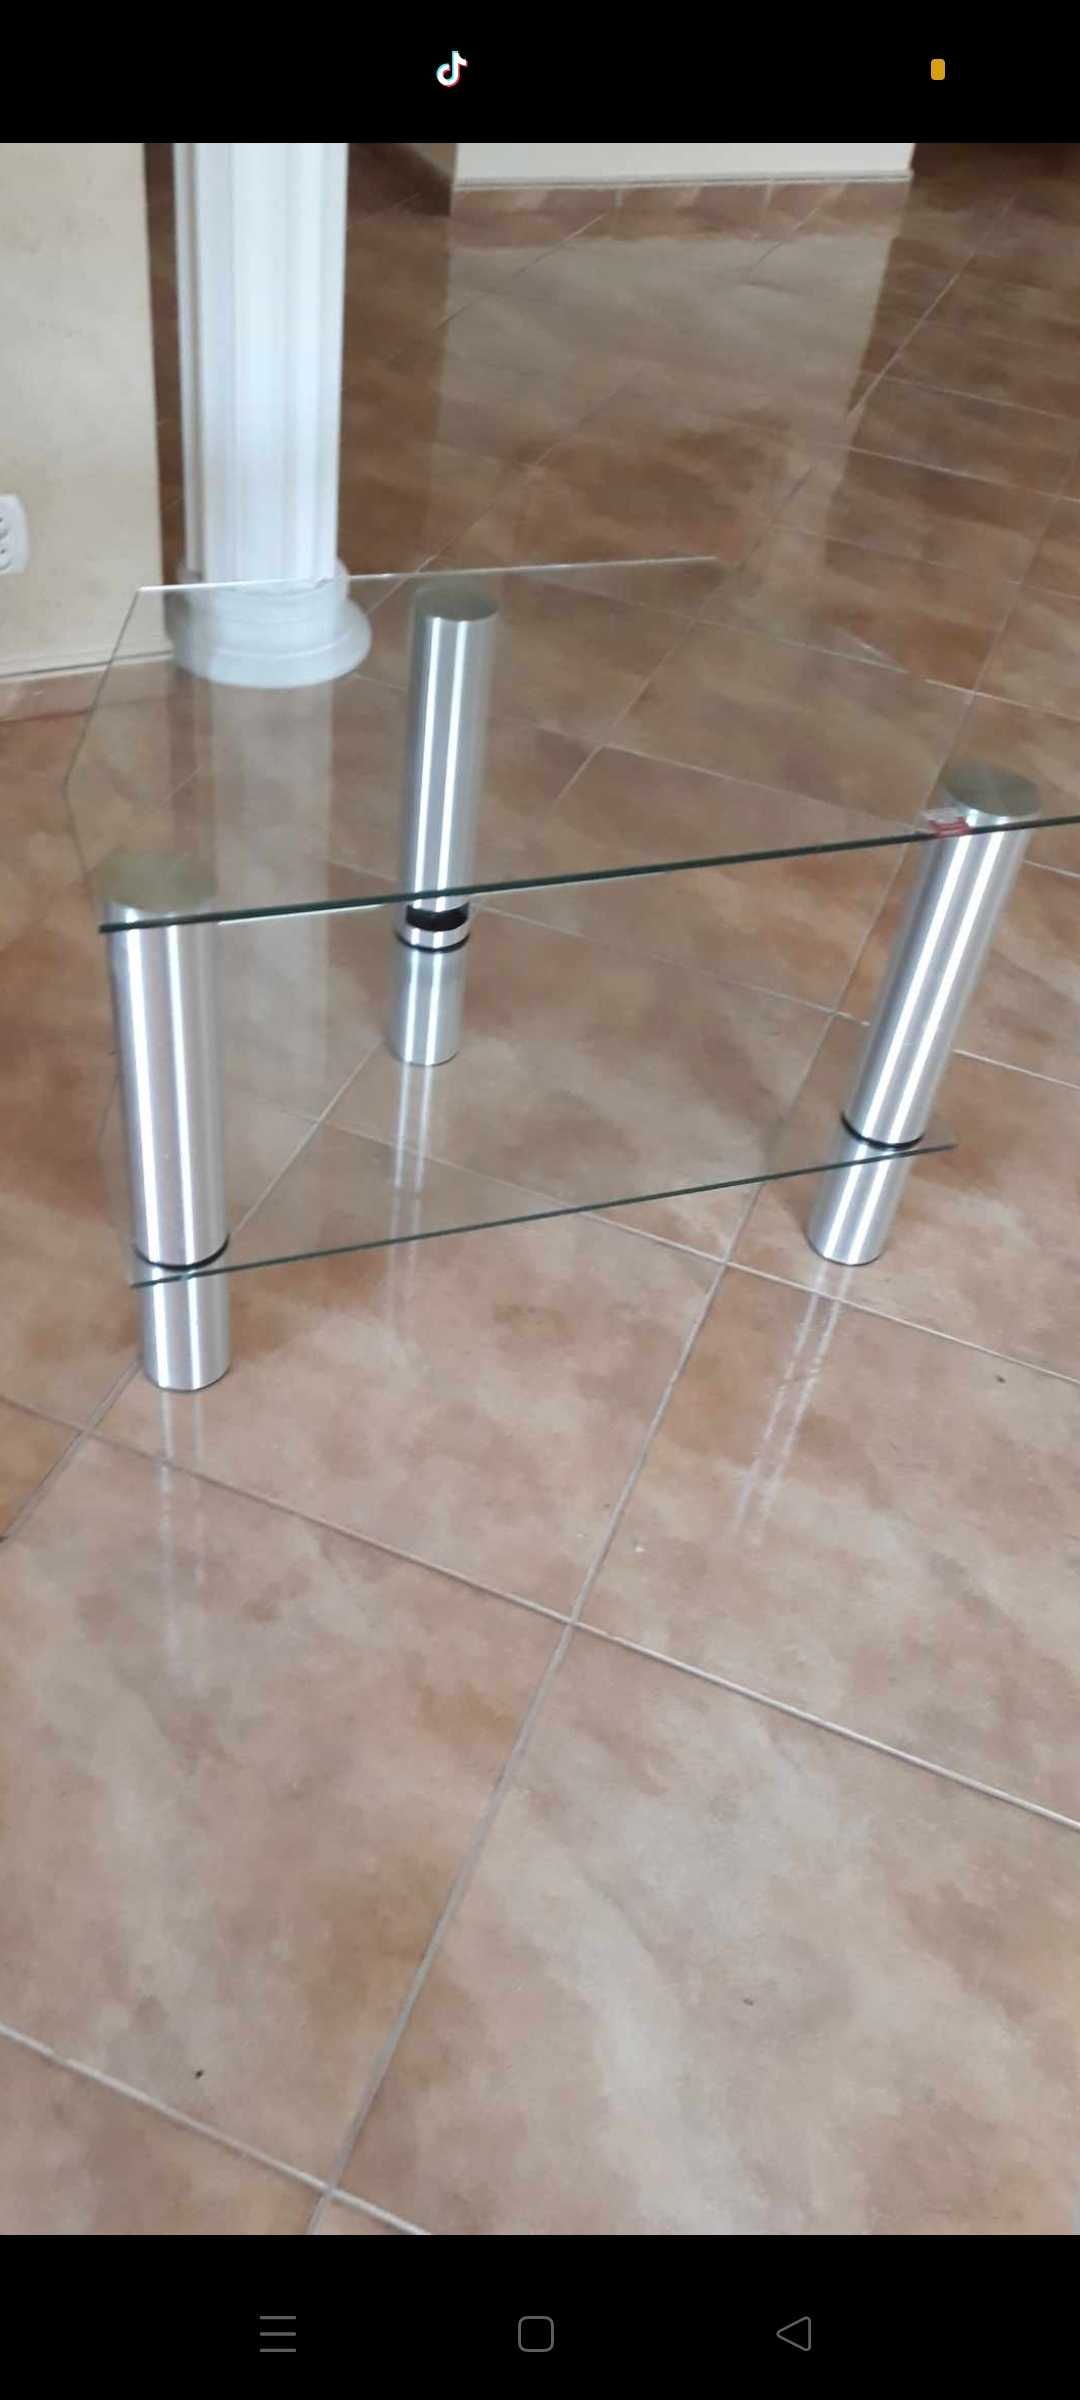 Stolik RTV, szklany stolik pod telewizor